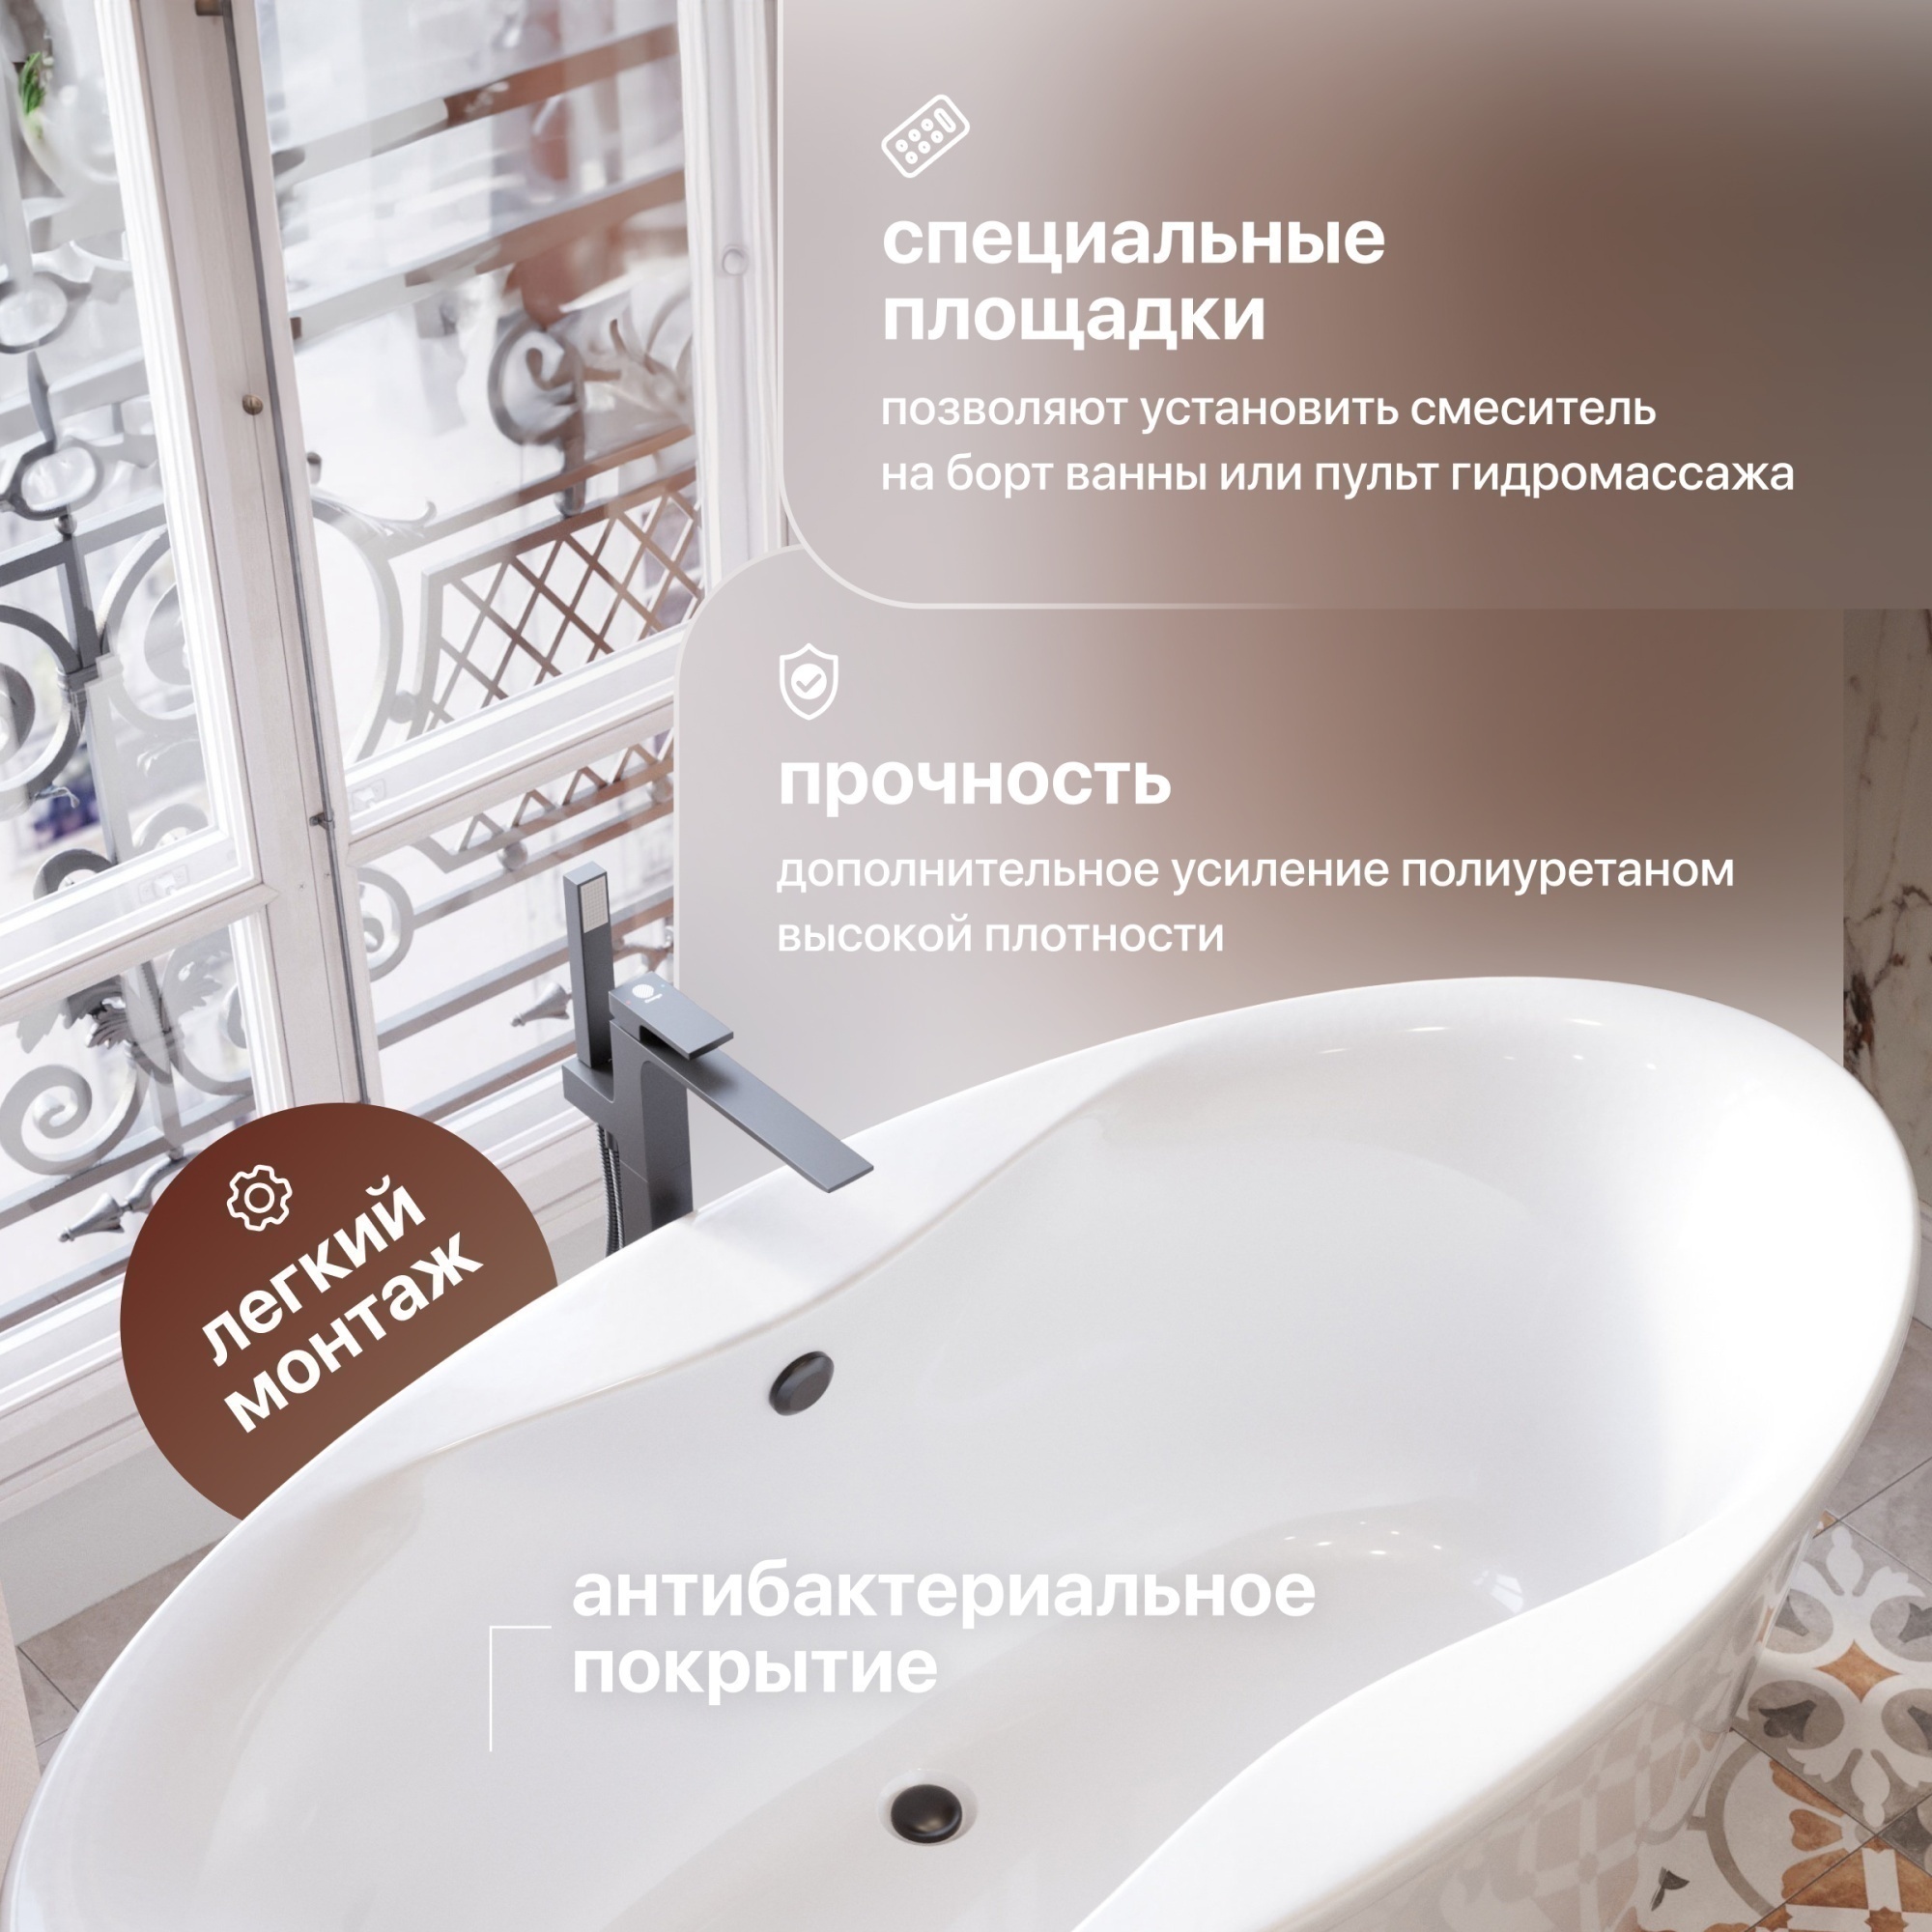 Акриловая ванна Stworki Вестерос 180x90 с каркасом